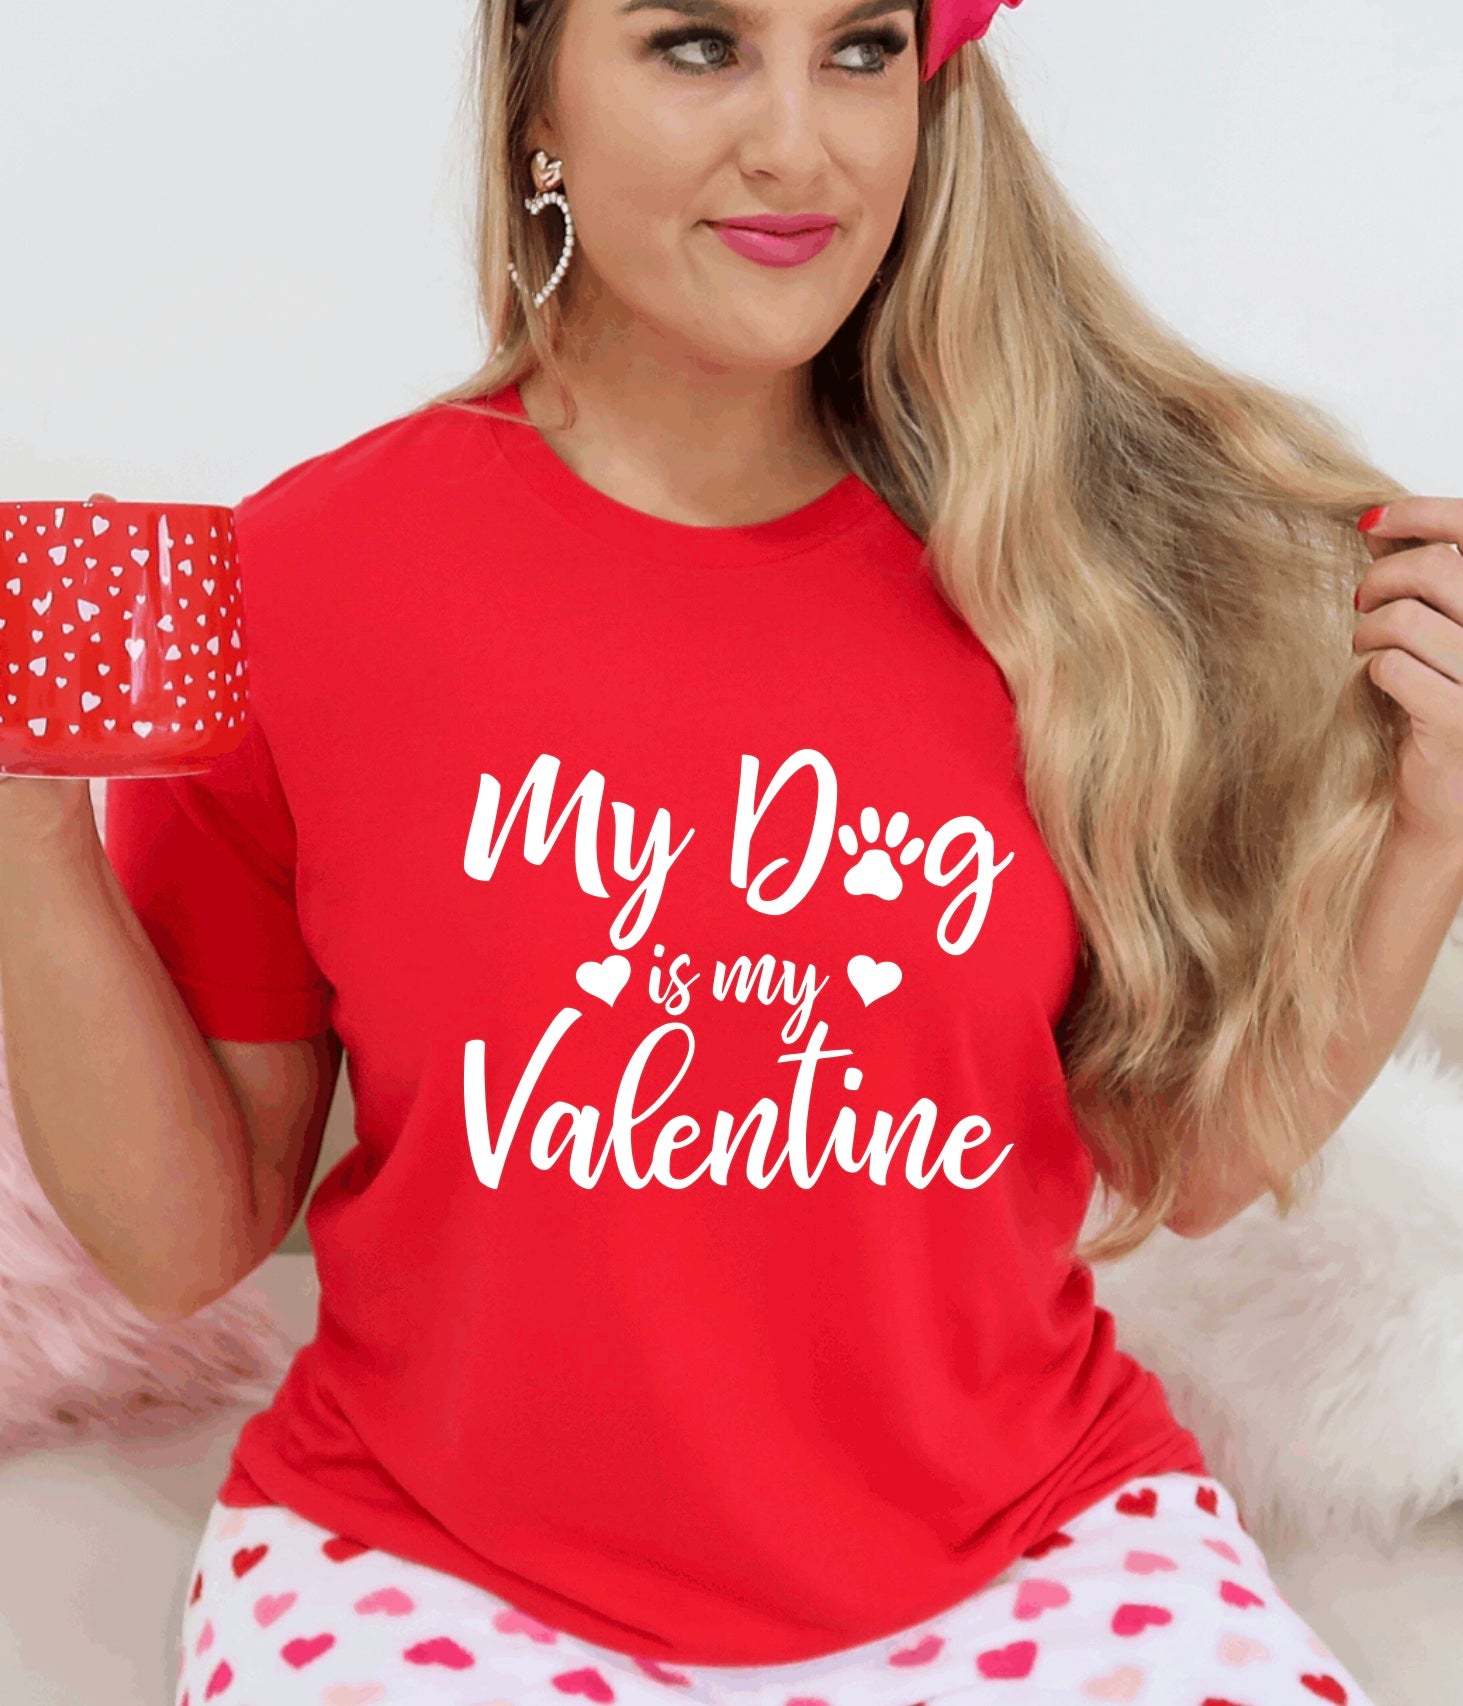 My dog is my Valentine t-shirt 